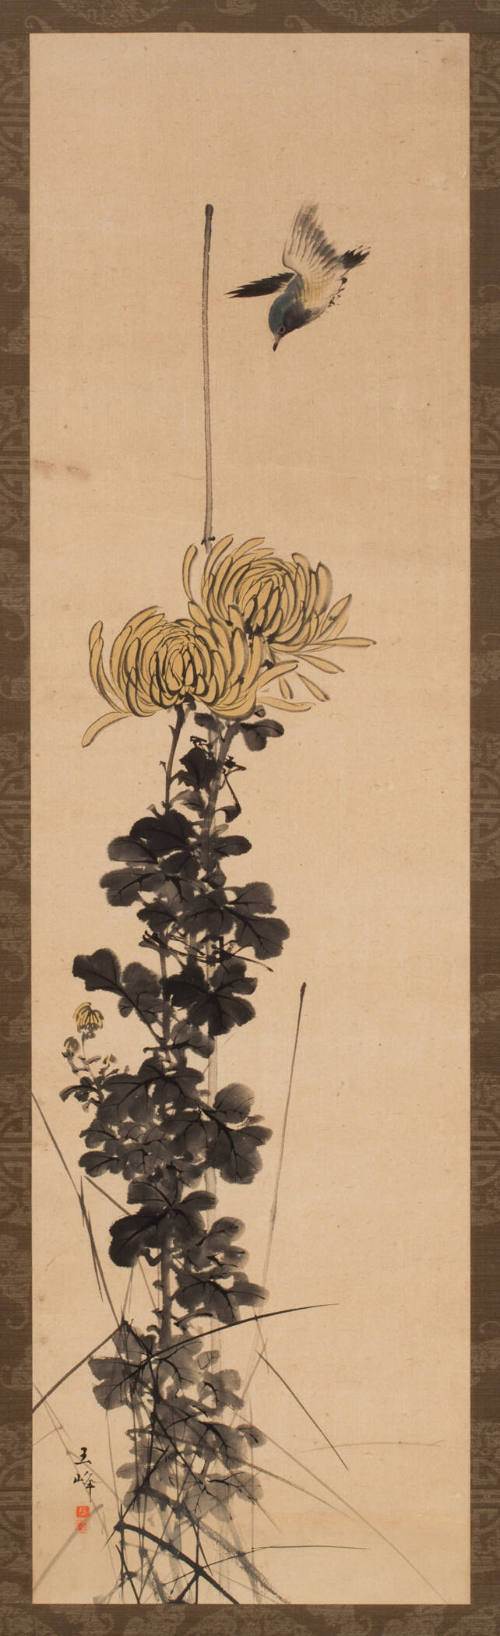 Bird and Chrysanthemum